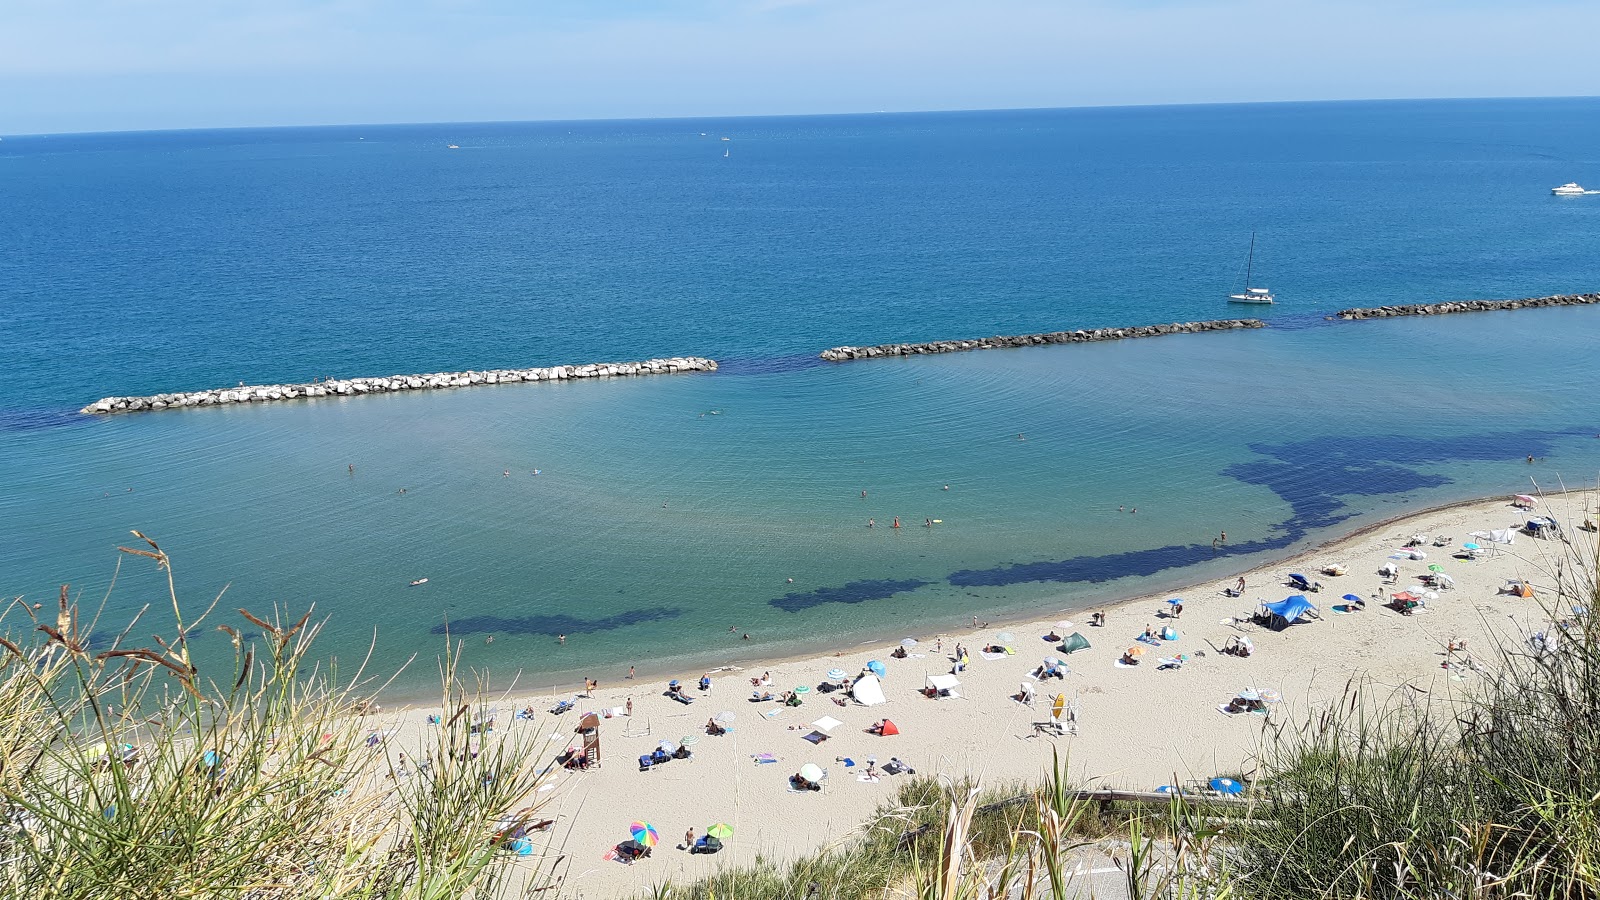 Foto de Spiaggia di Fiorenzuola di Focara localizado em área natural